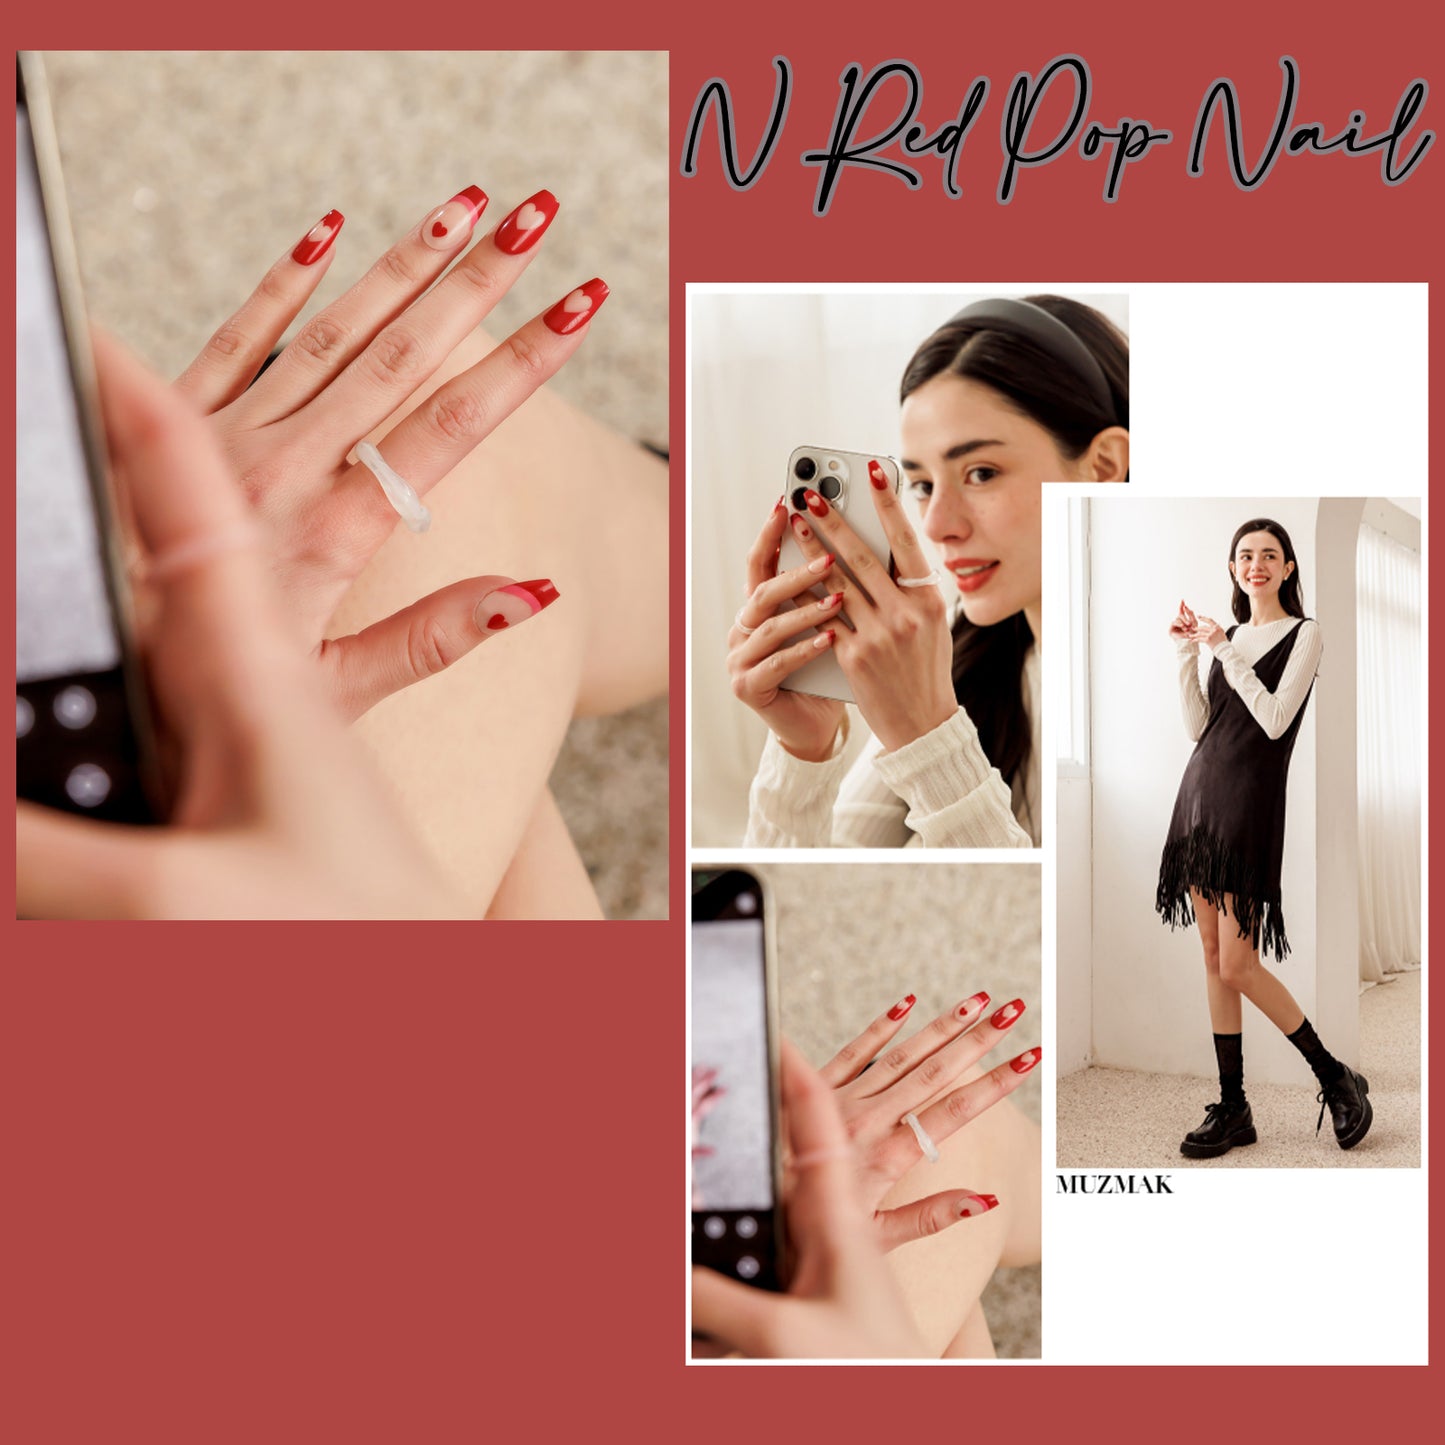 Muzmak (N Red Pop Nail) 36pcs Nail Art Pattern Sticker Set Semicure Nail